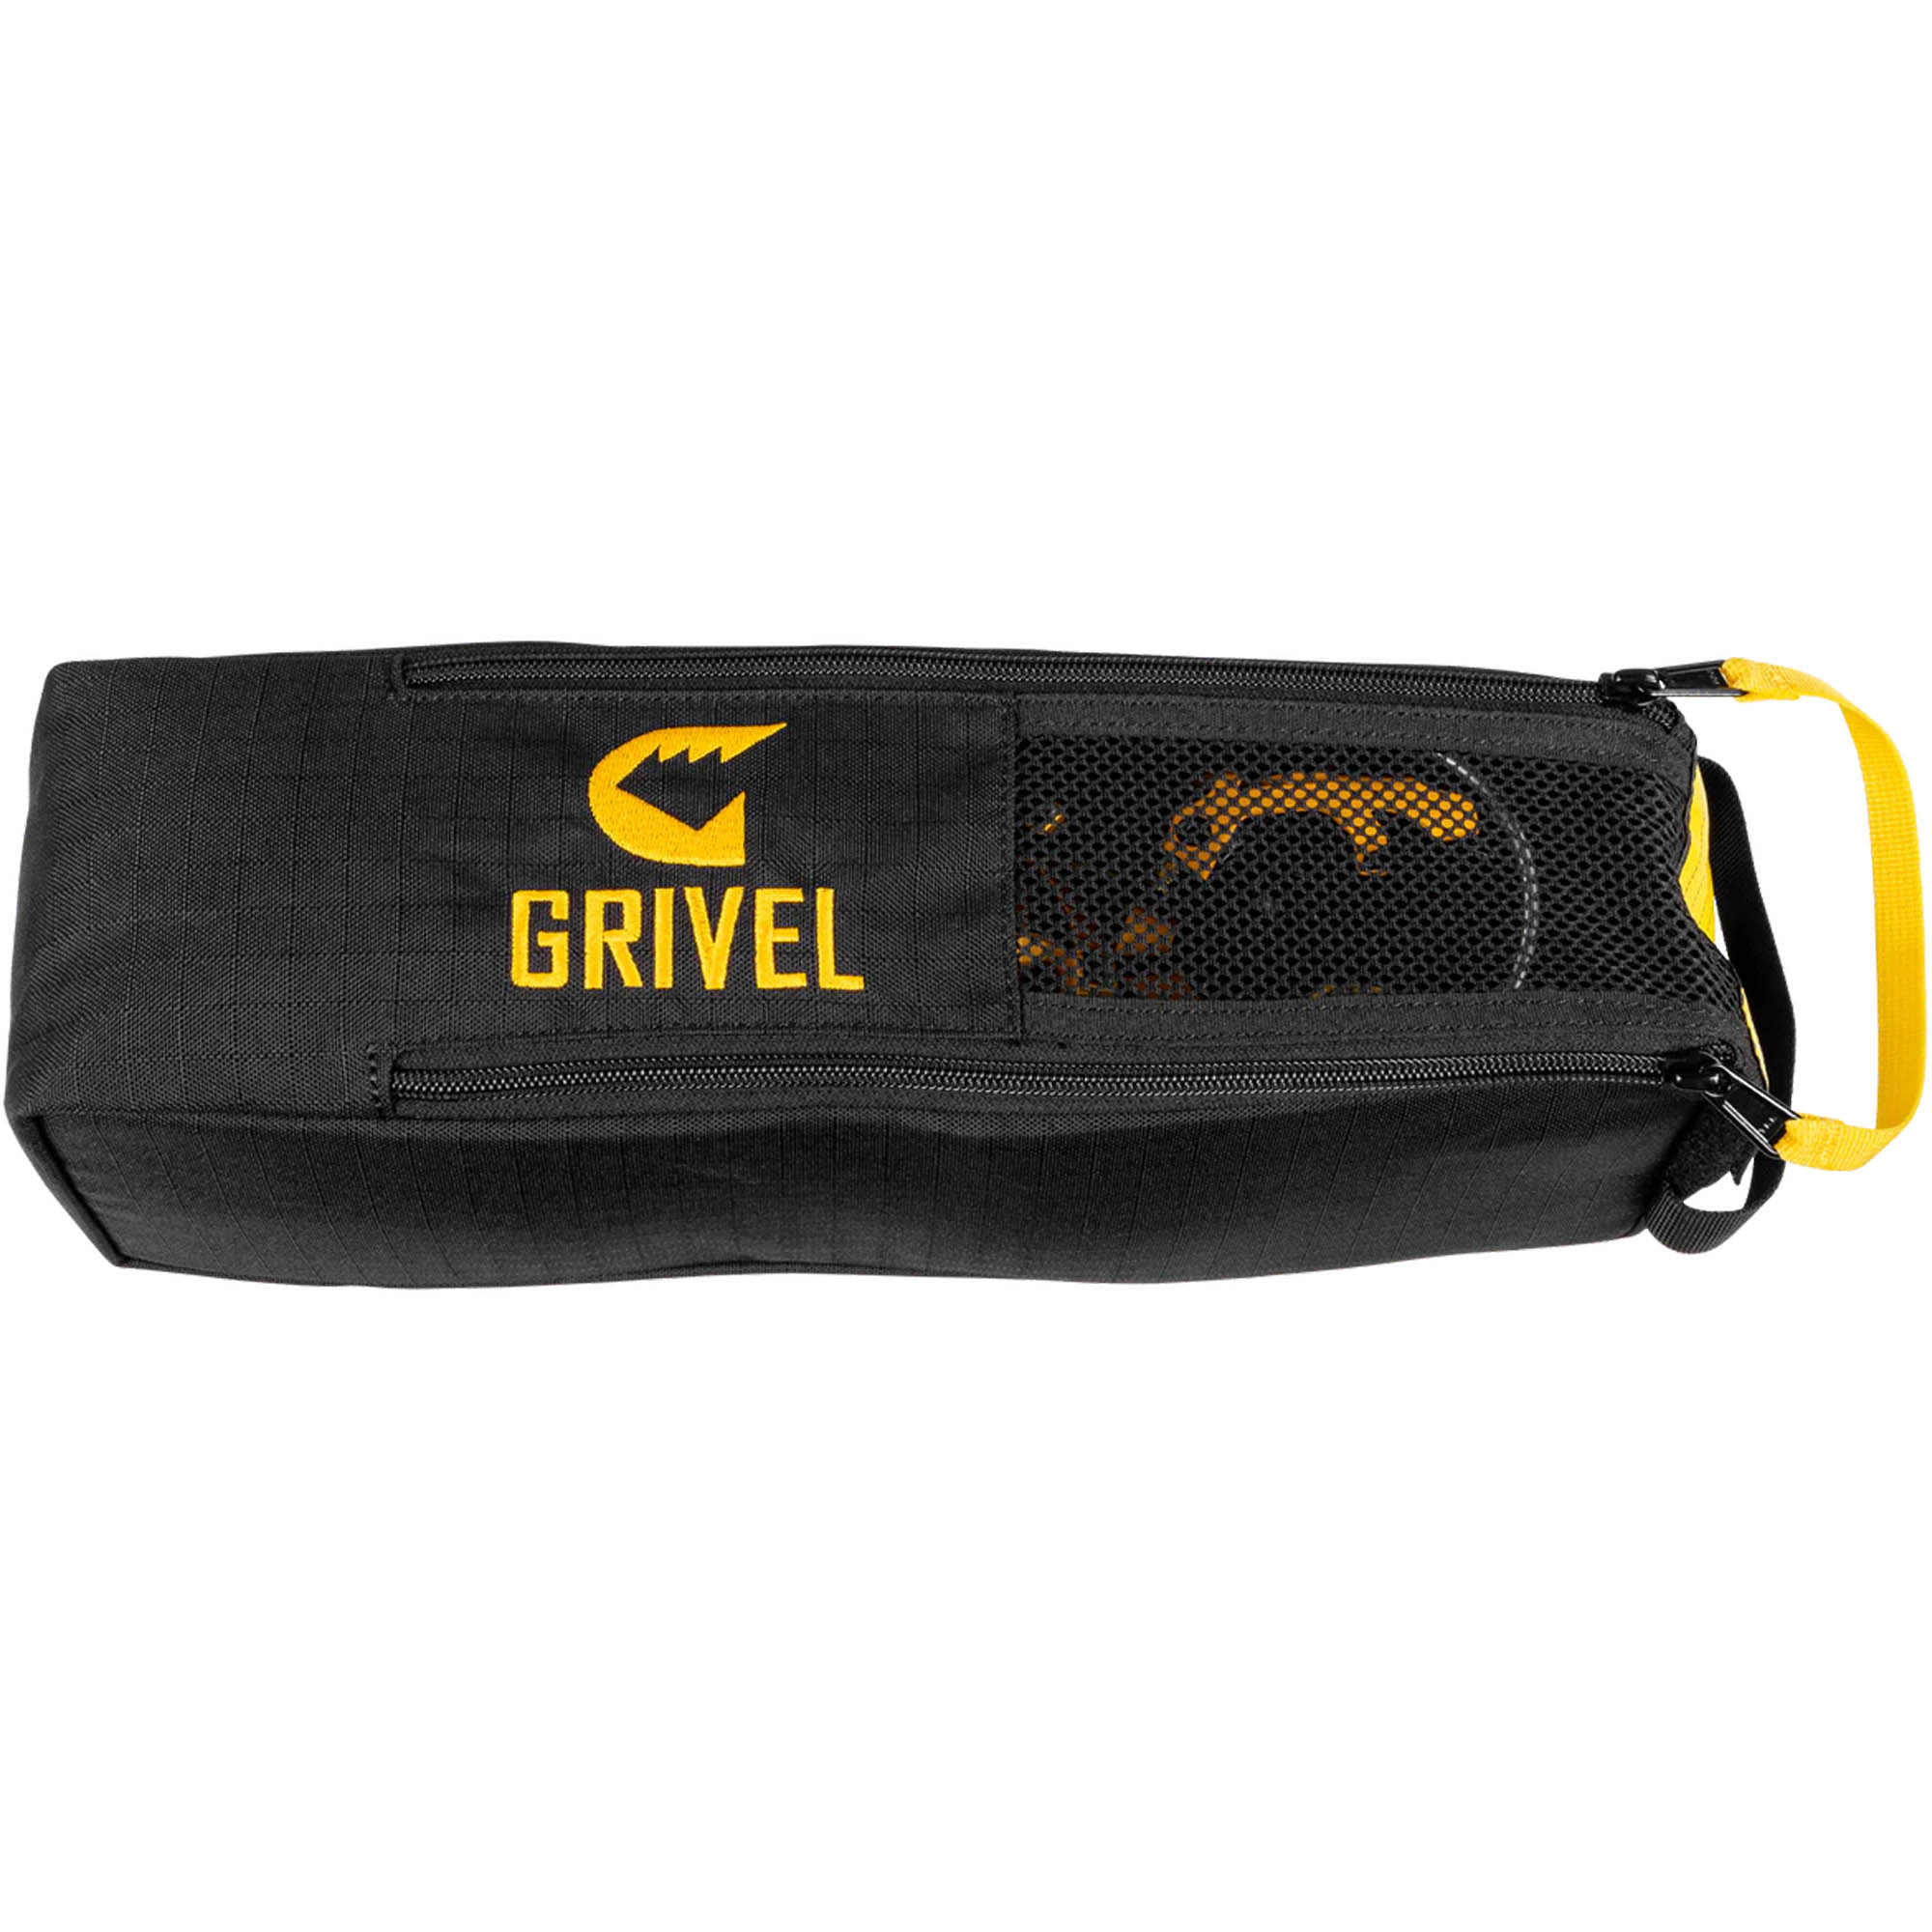 Grivel Crampon Safe Crampon Storage Bag